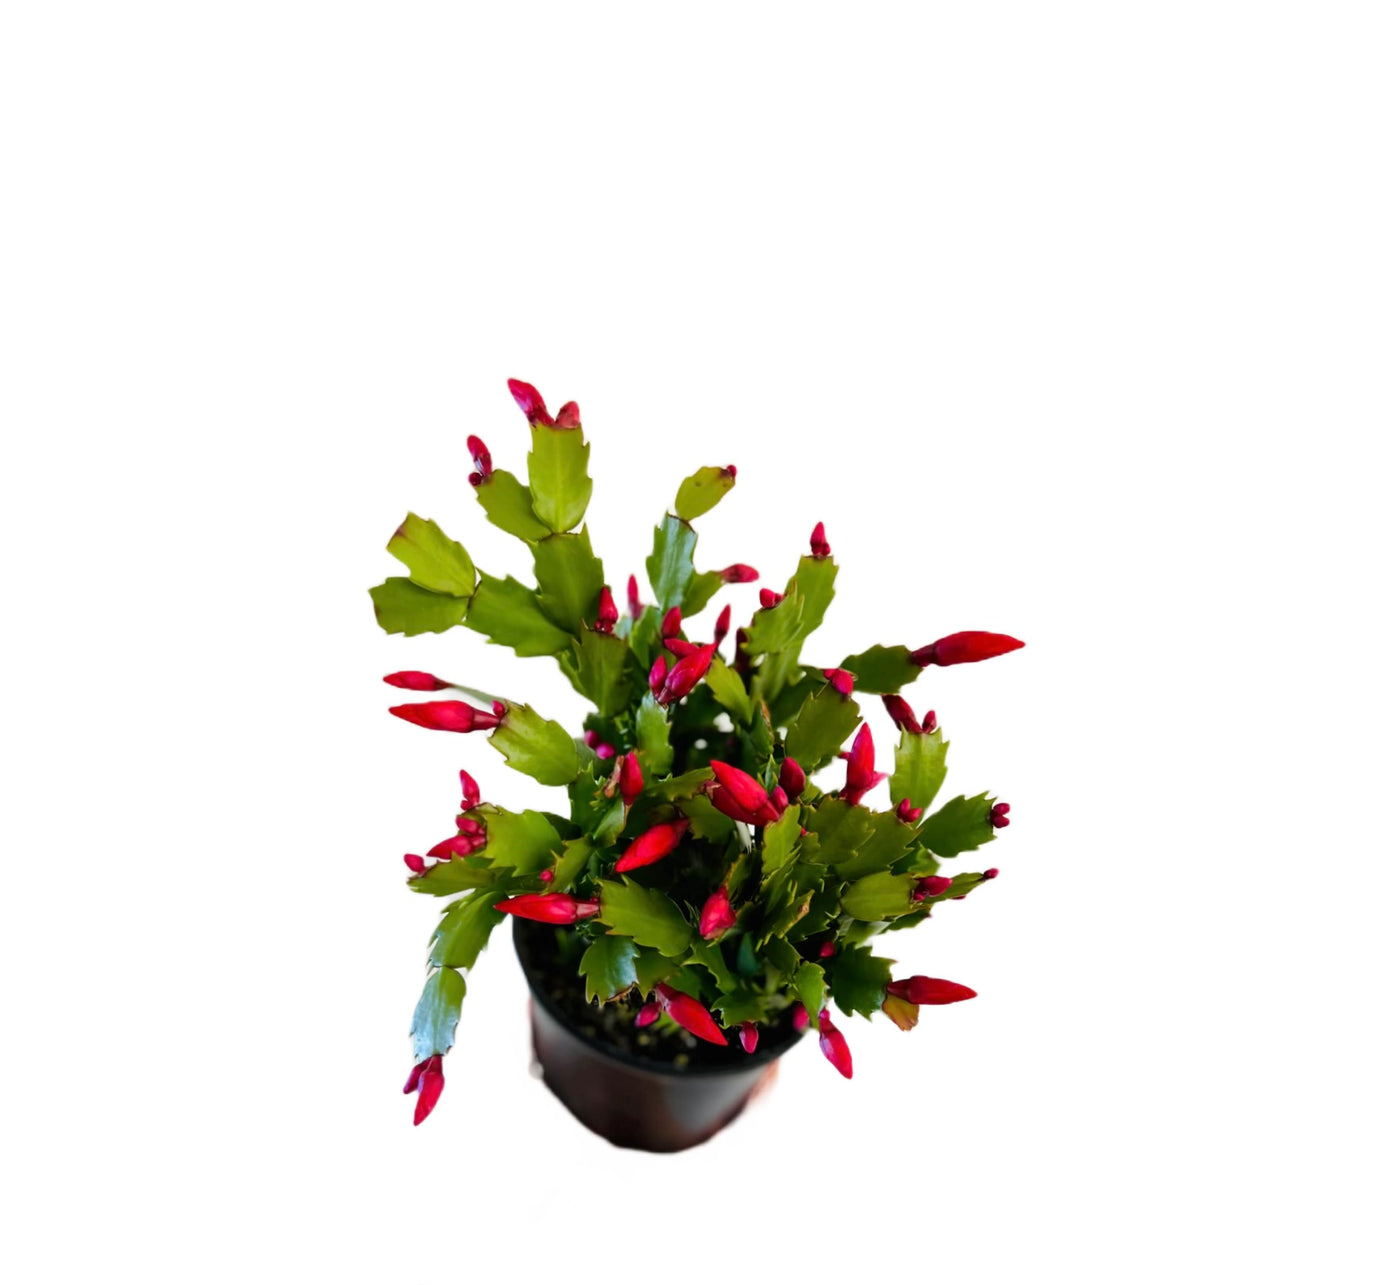 6 inch Christmas Cactus (Schlumbergera bridgesii) for sale near me